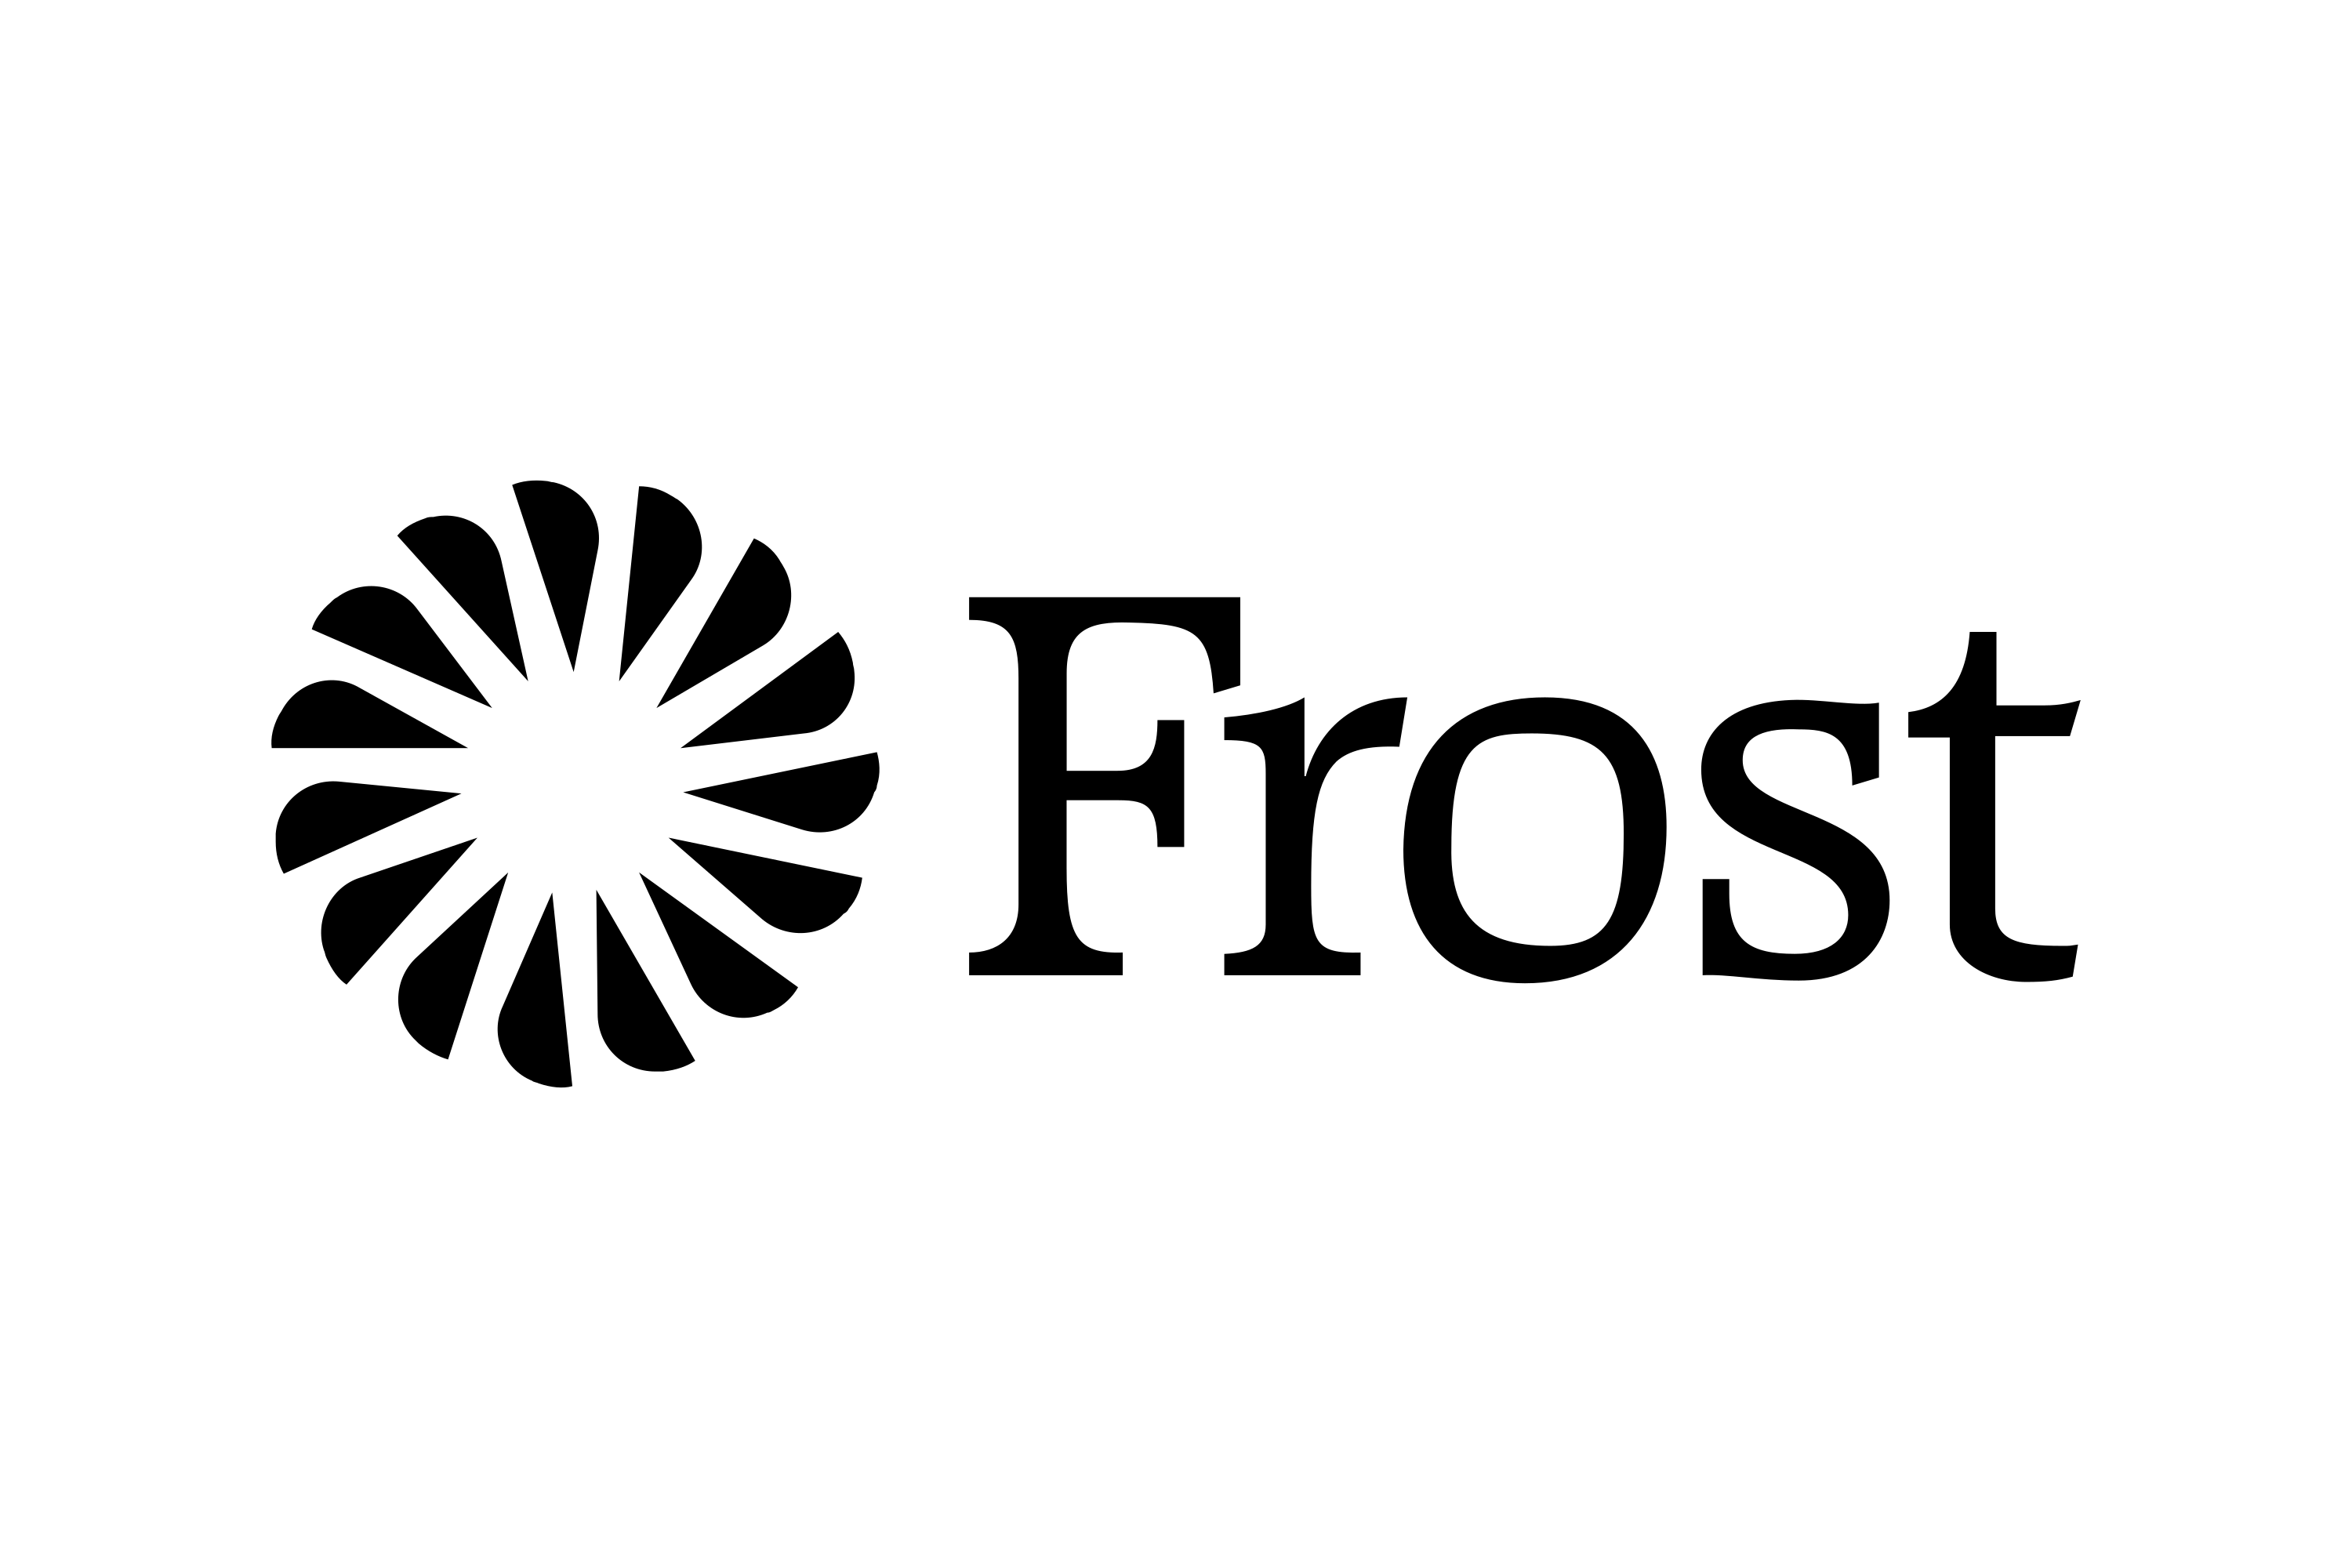 Frost Bank Logo